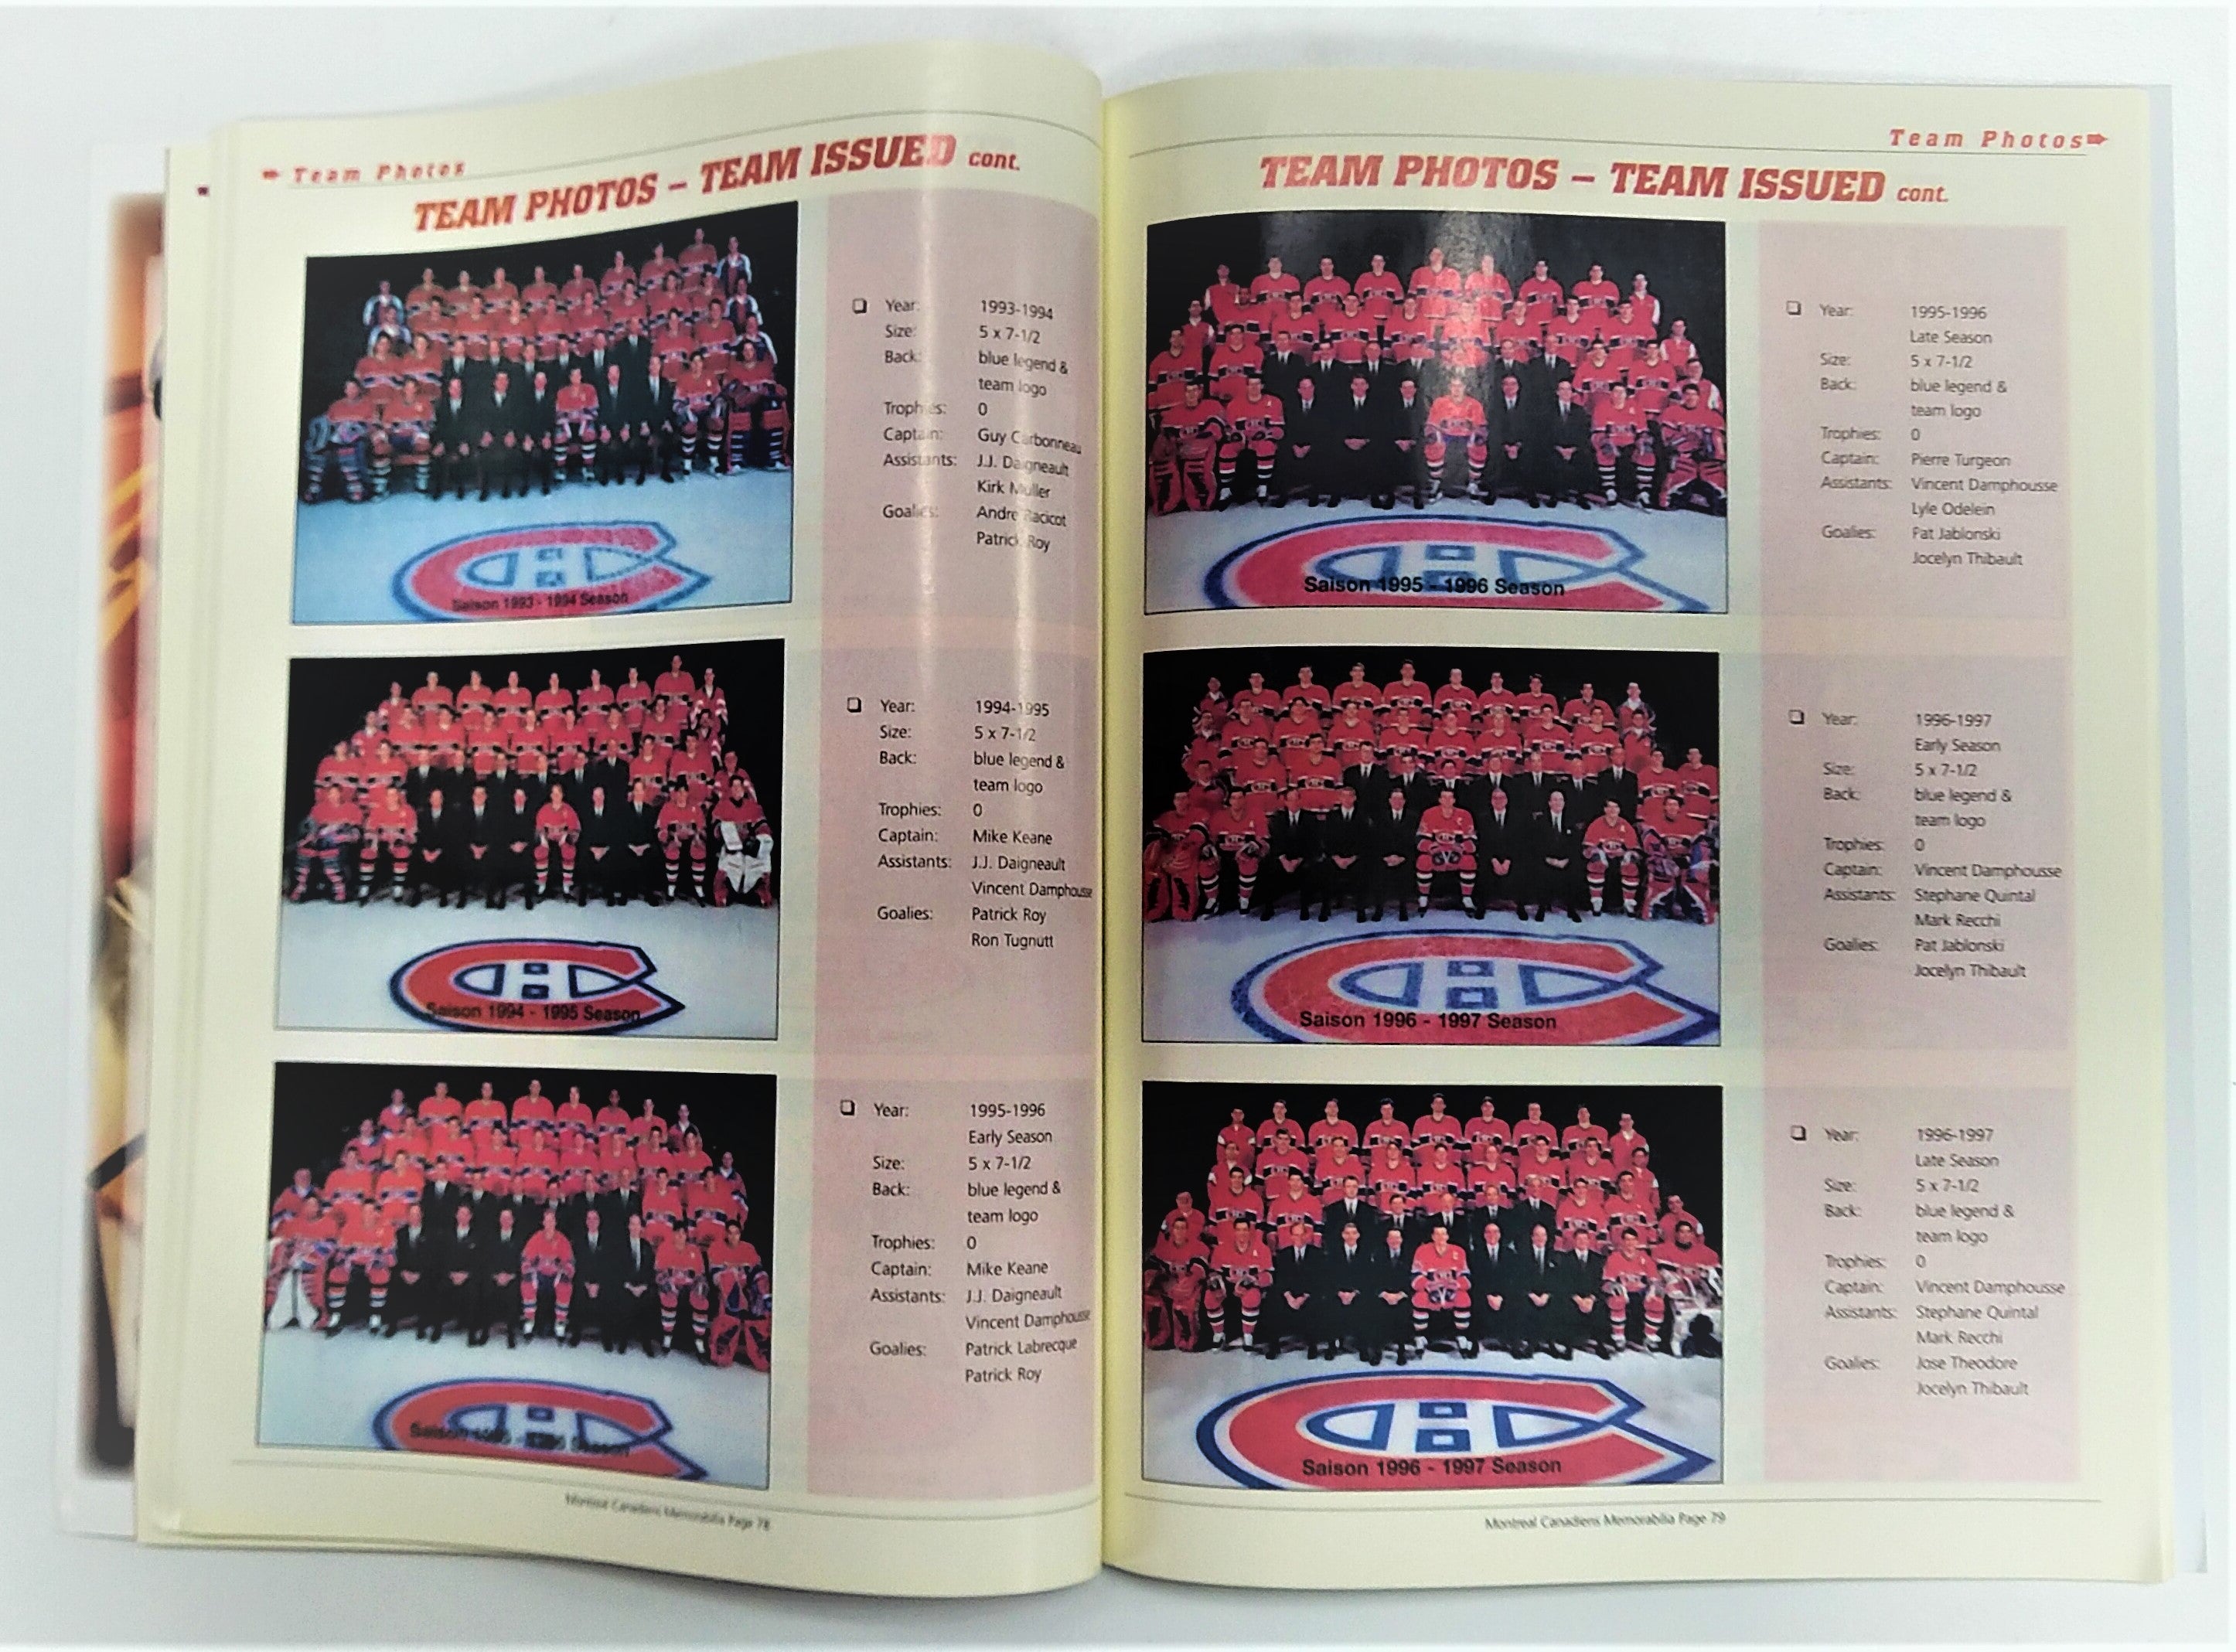 The Memorabilia of the Montreal Canadiens Guide Book - Miraj Trading